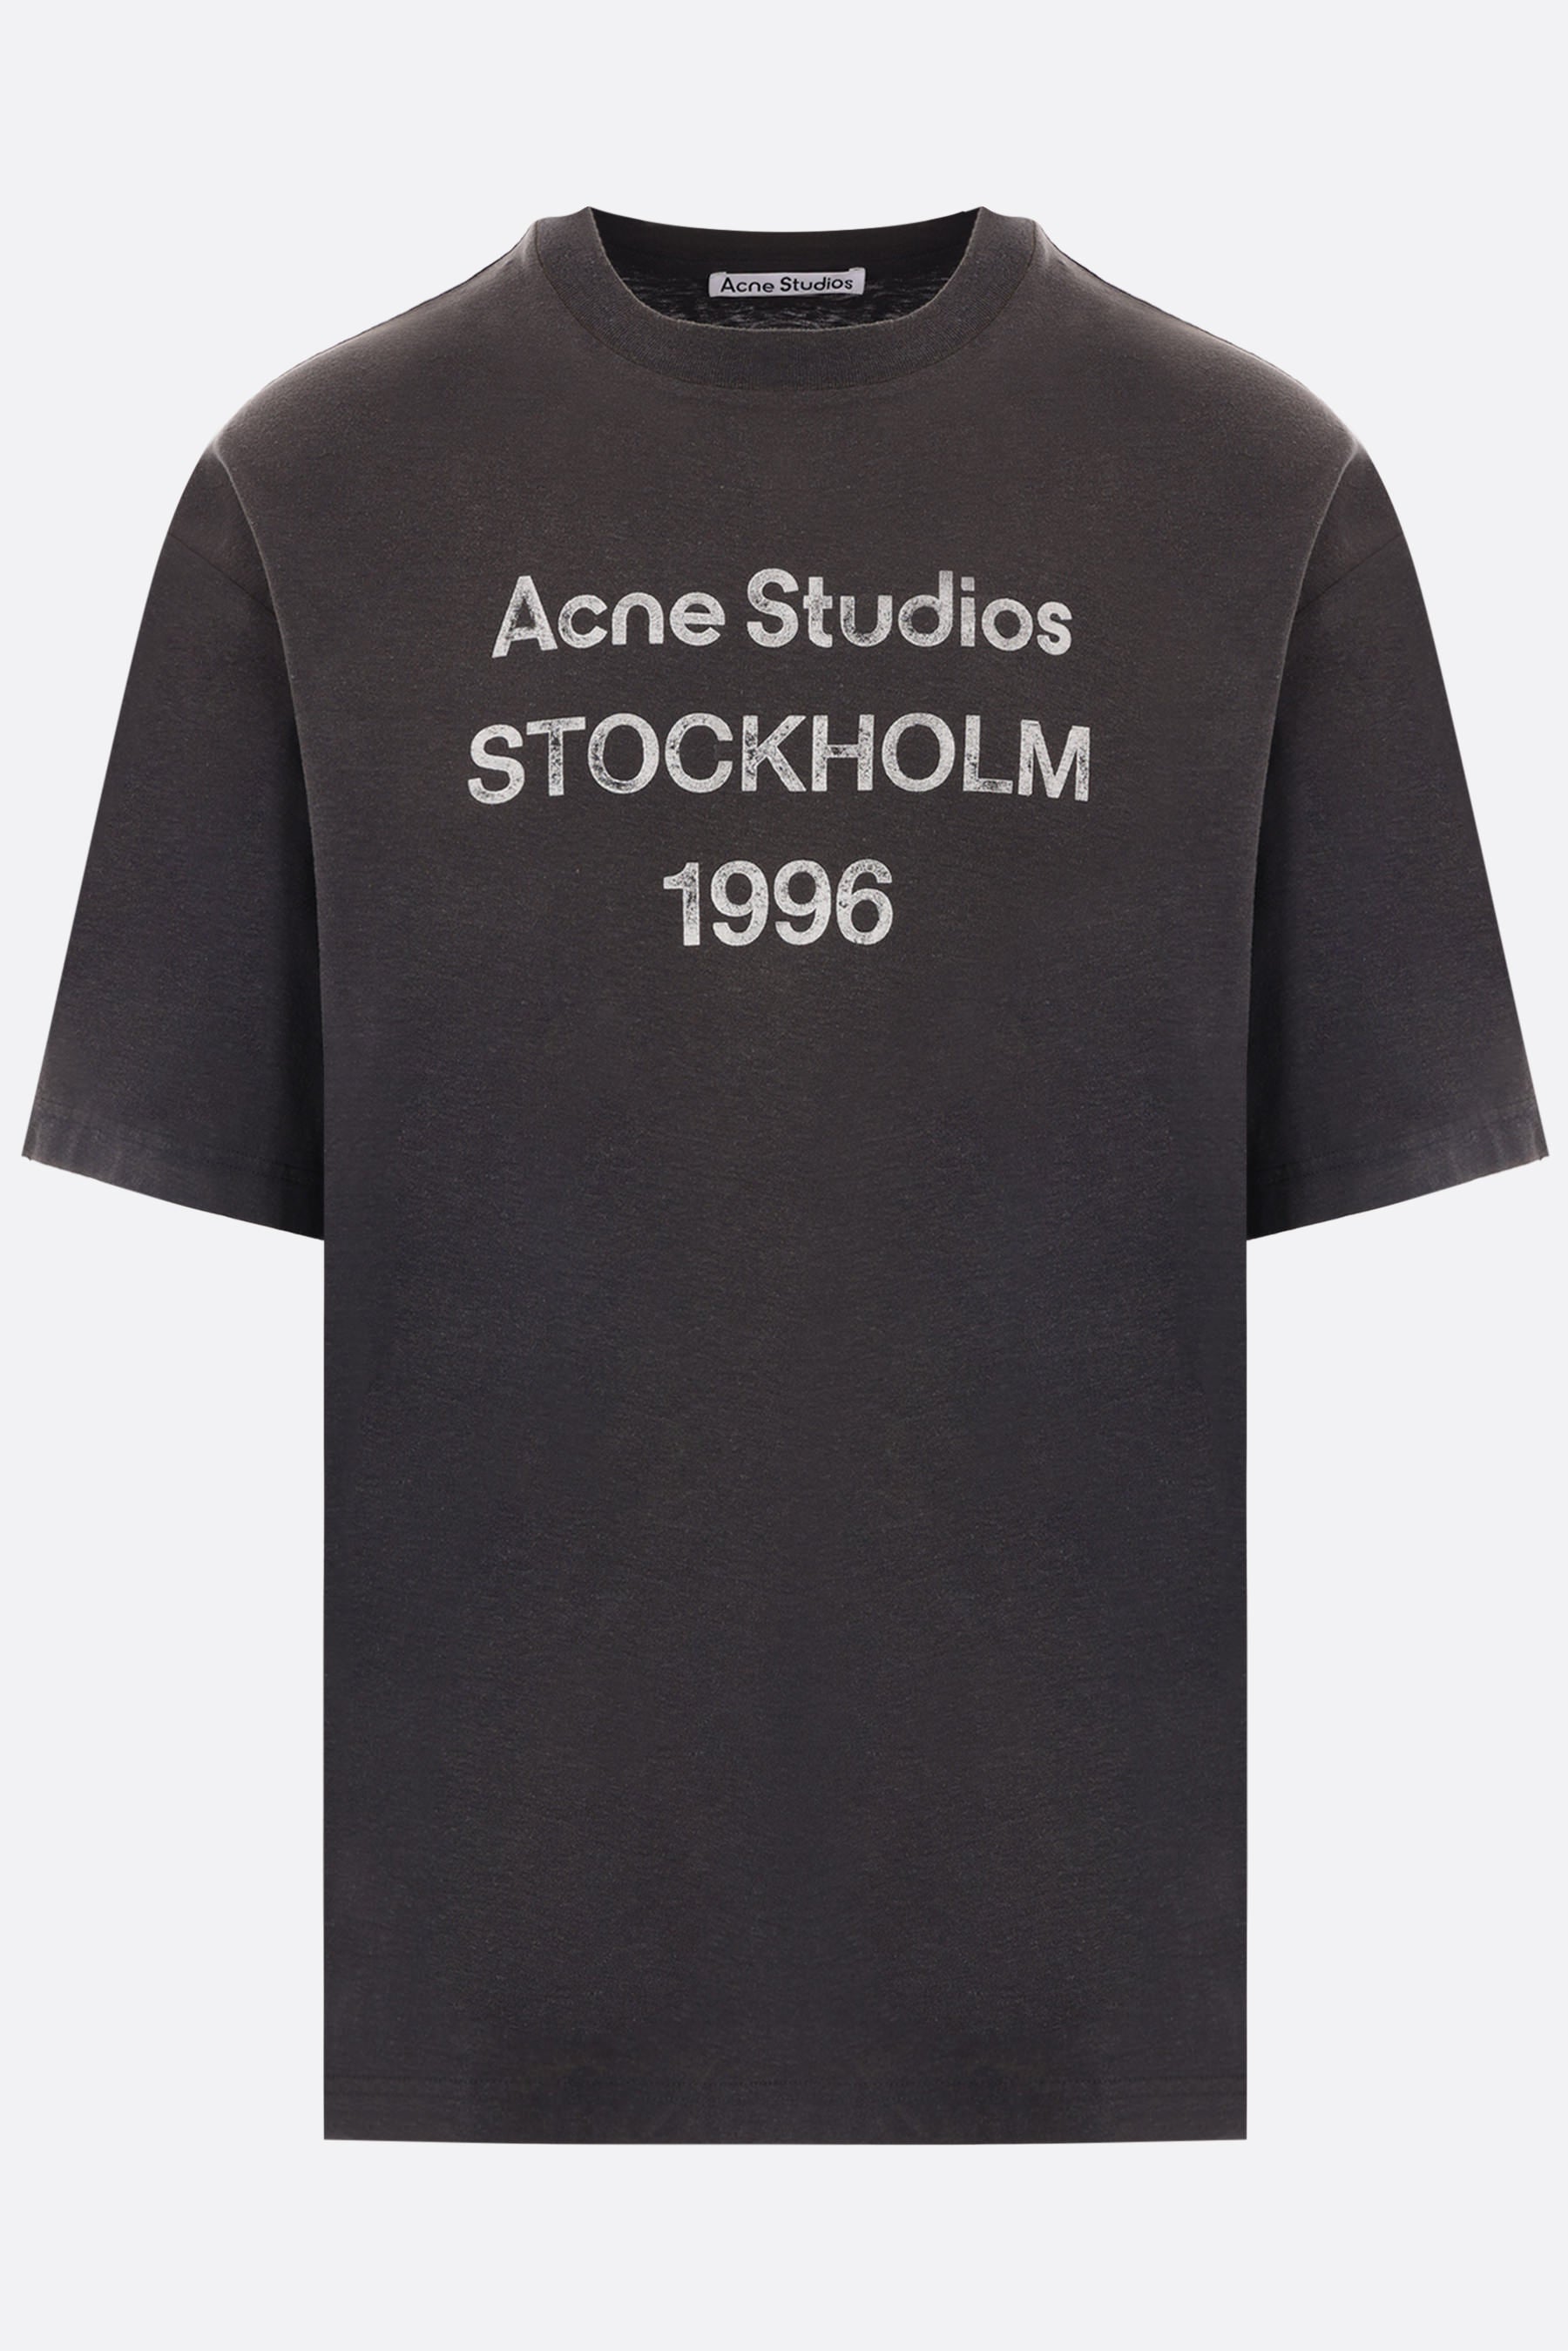 Acne Studios 1996 print cotton and hemp t-shirt